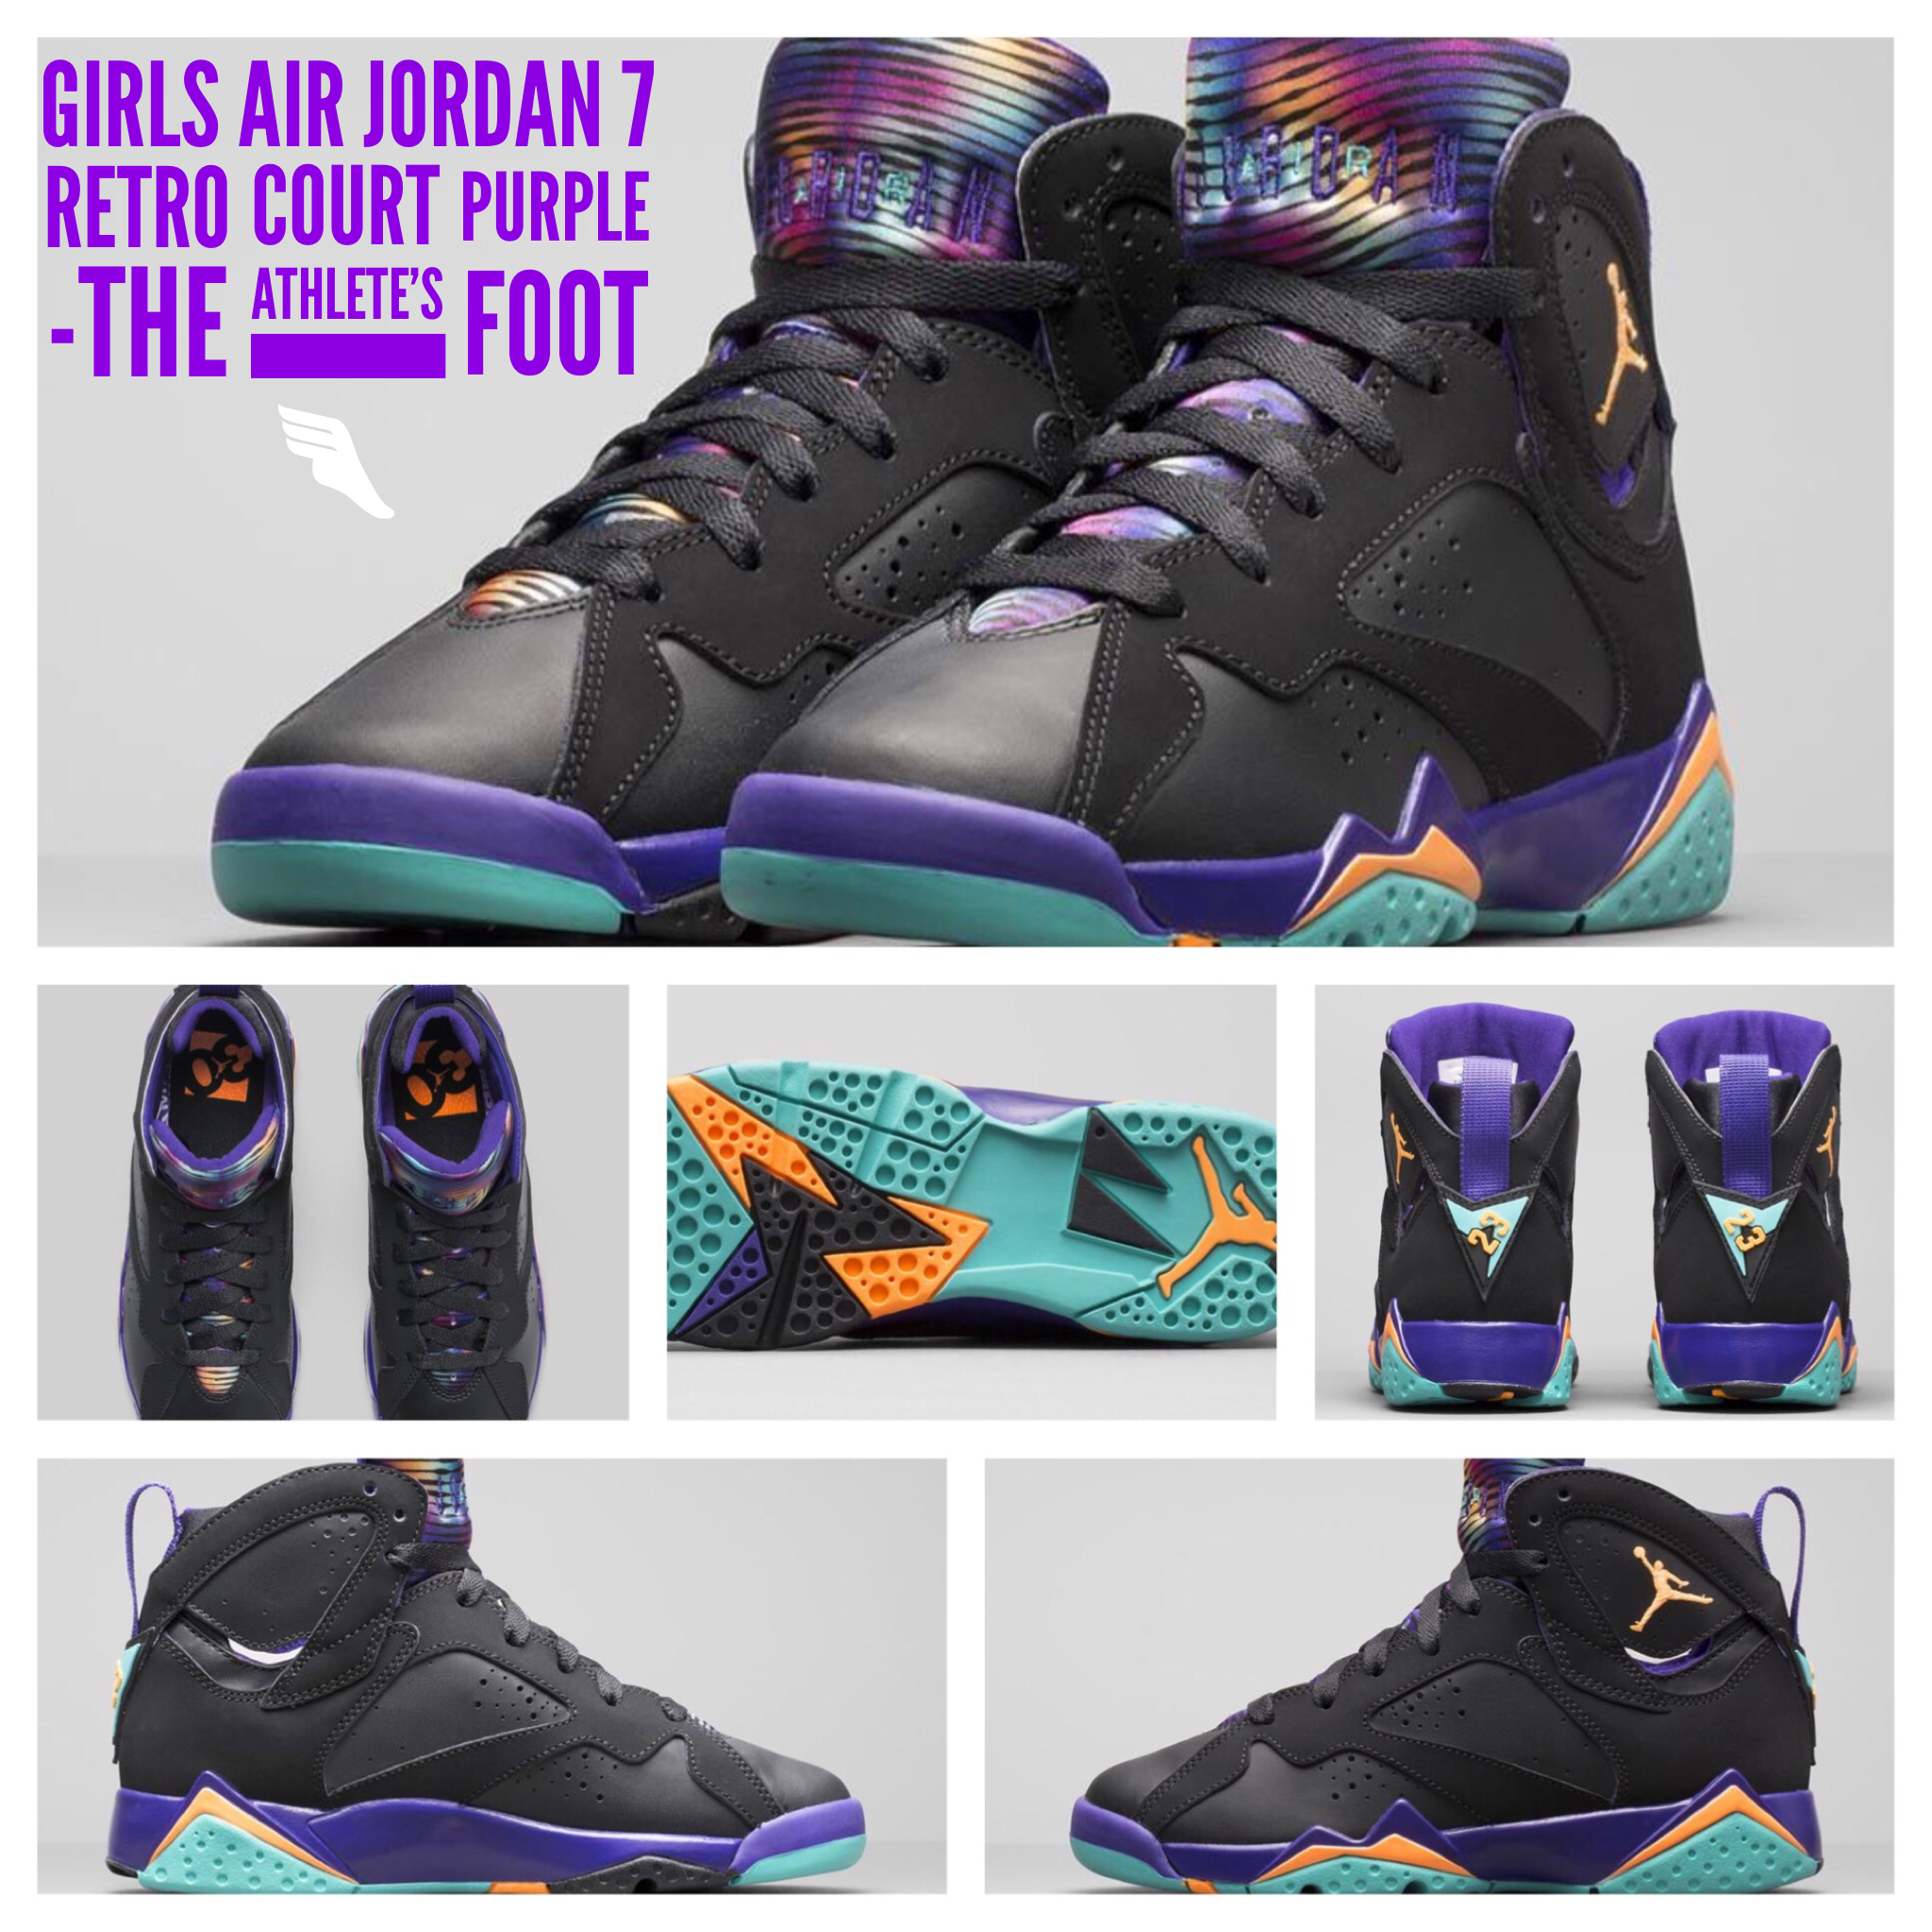 Girls Air Jordan 7 Retro Court Purple l 